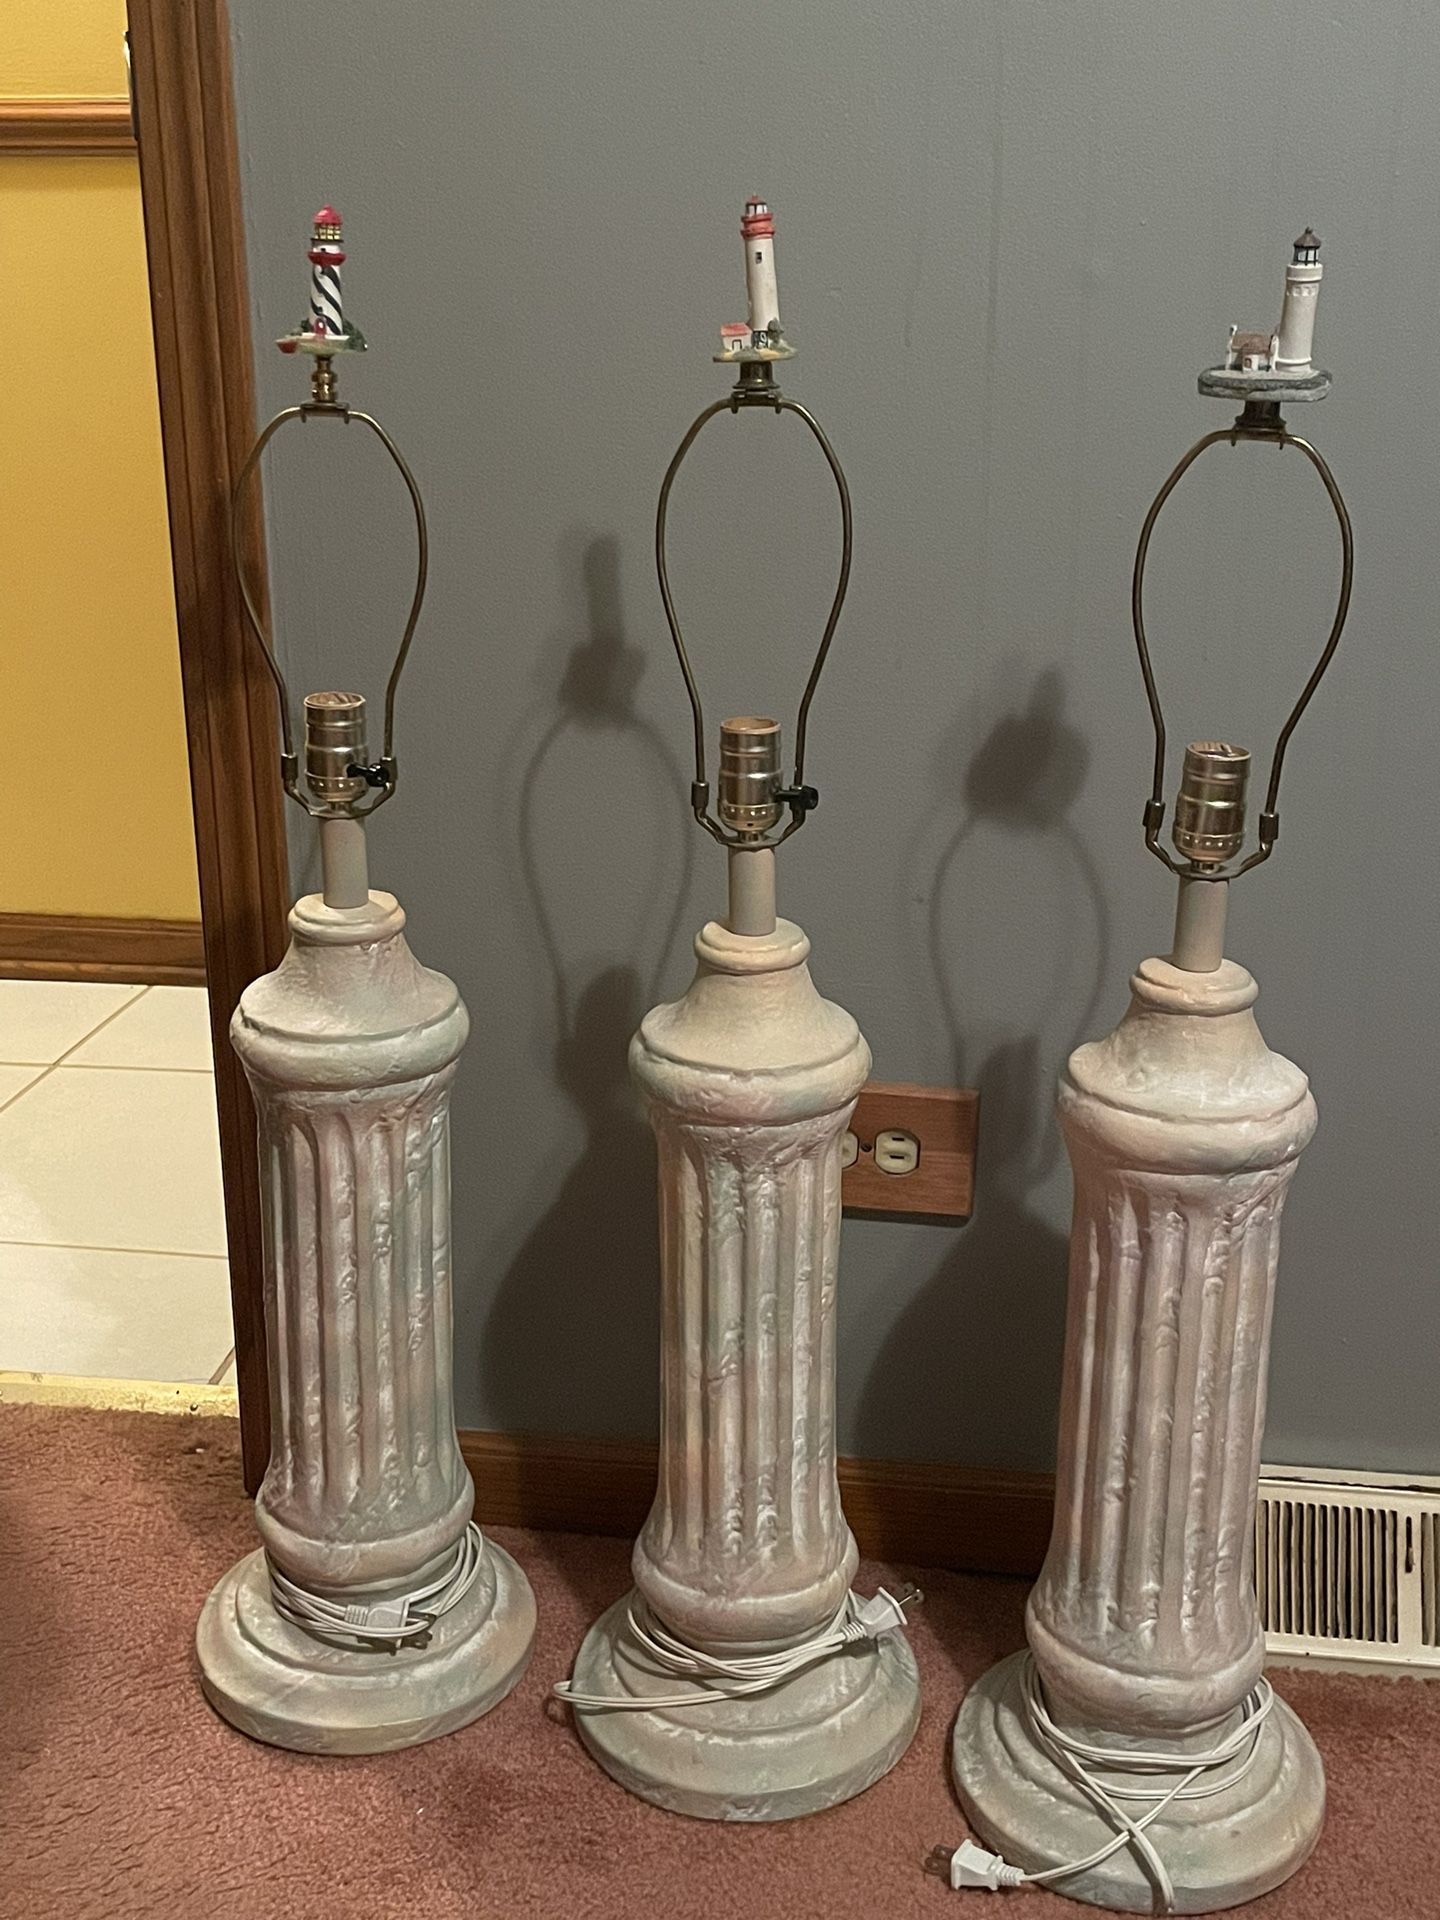 3 Clay/ceramic Lamps   Vintage 